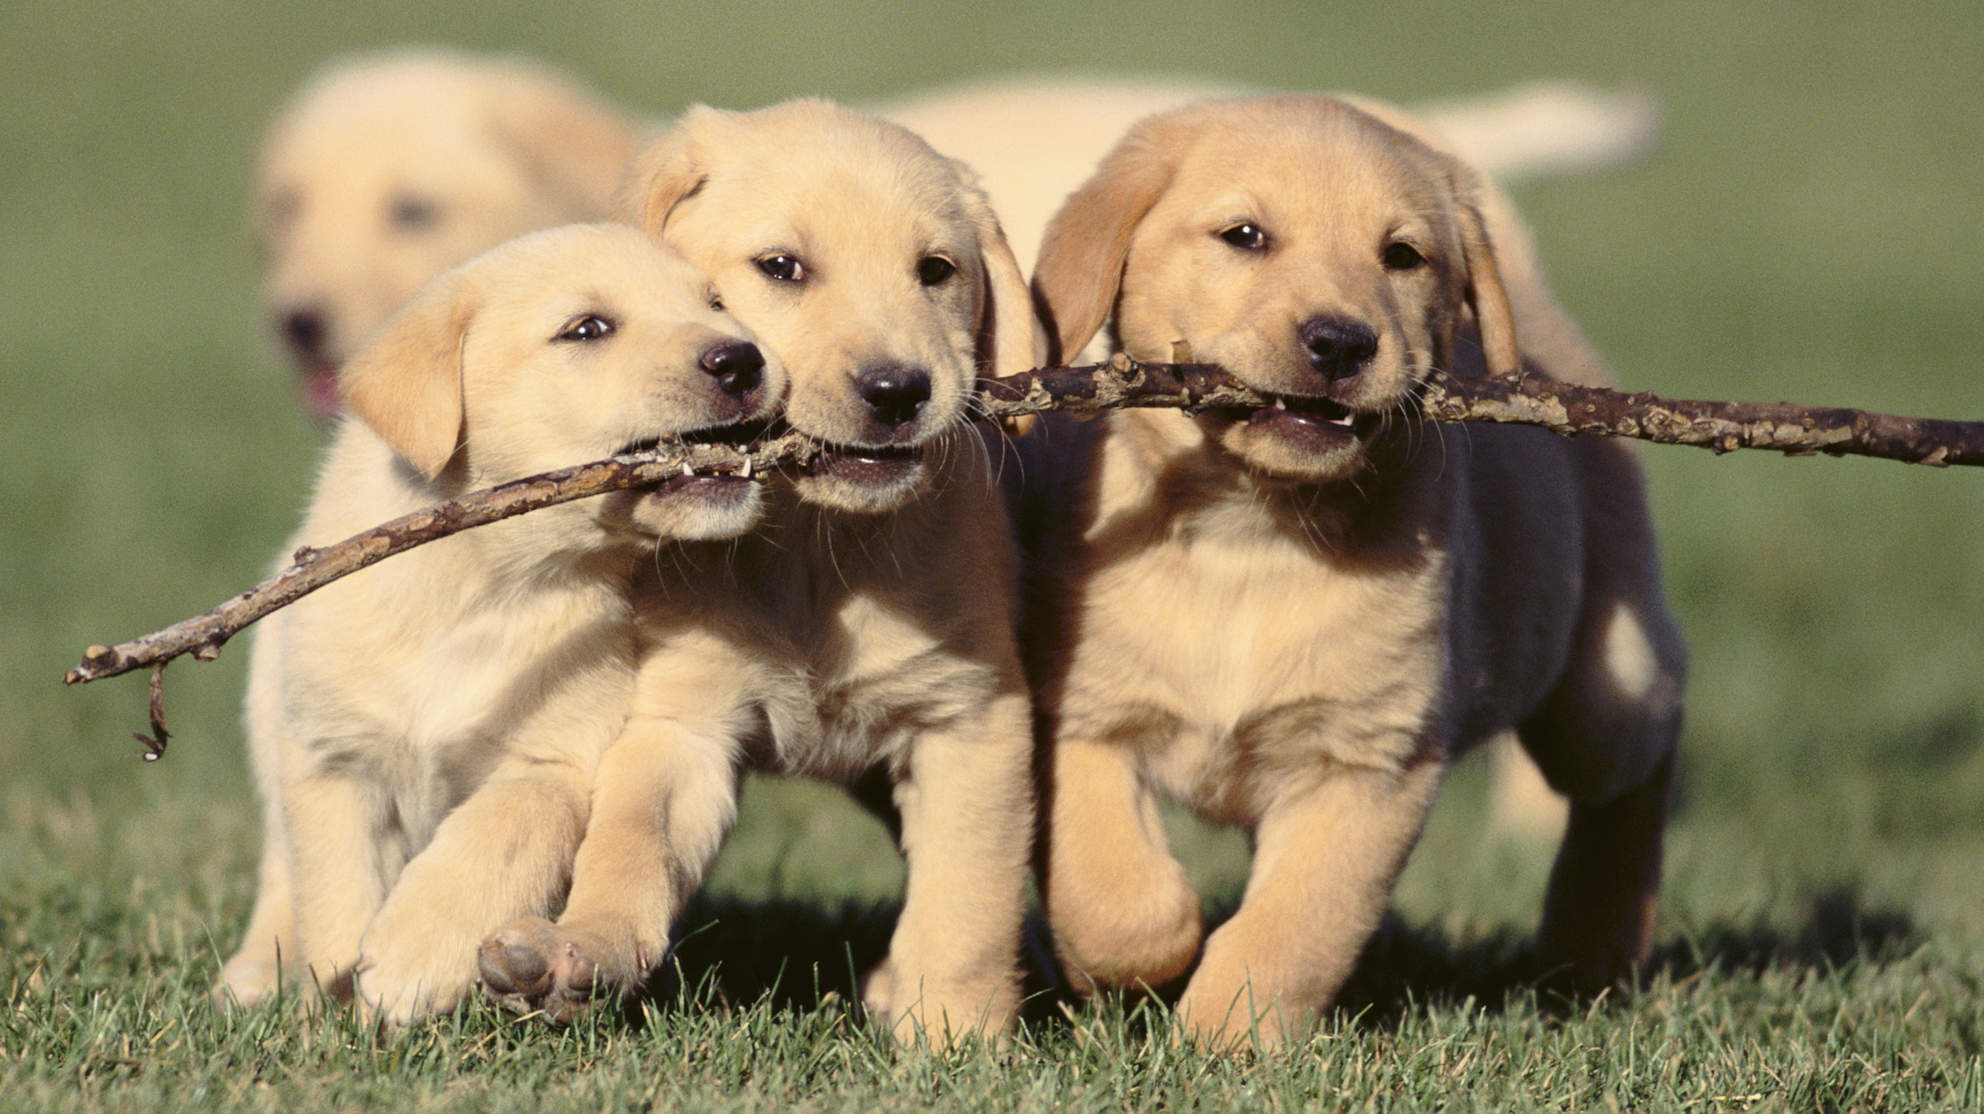 playful puppies - Cute Puppies Photo (41540150) - Fanpop